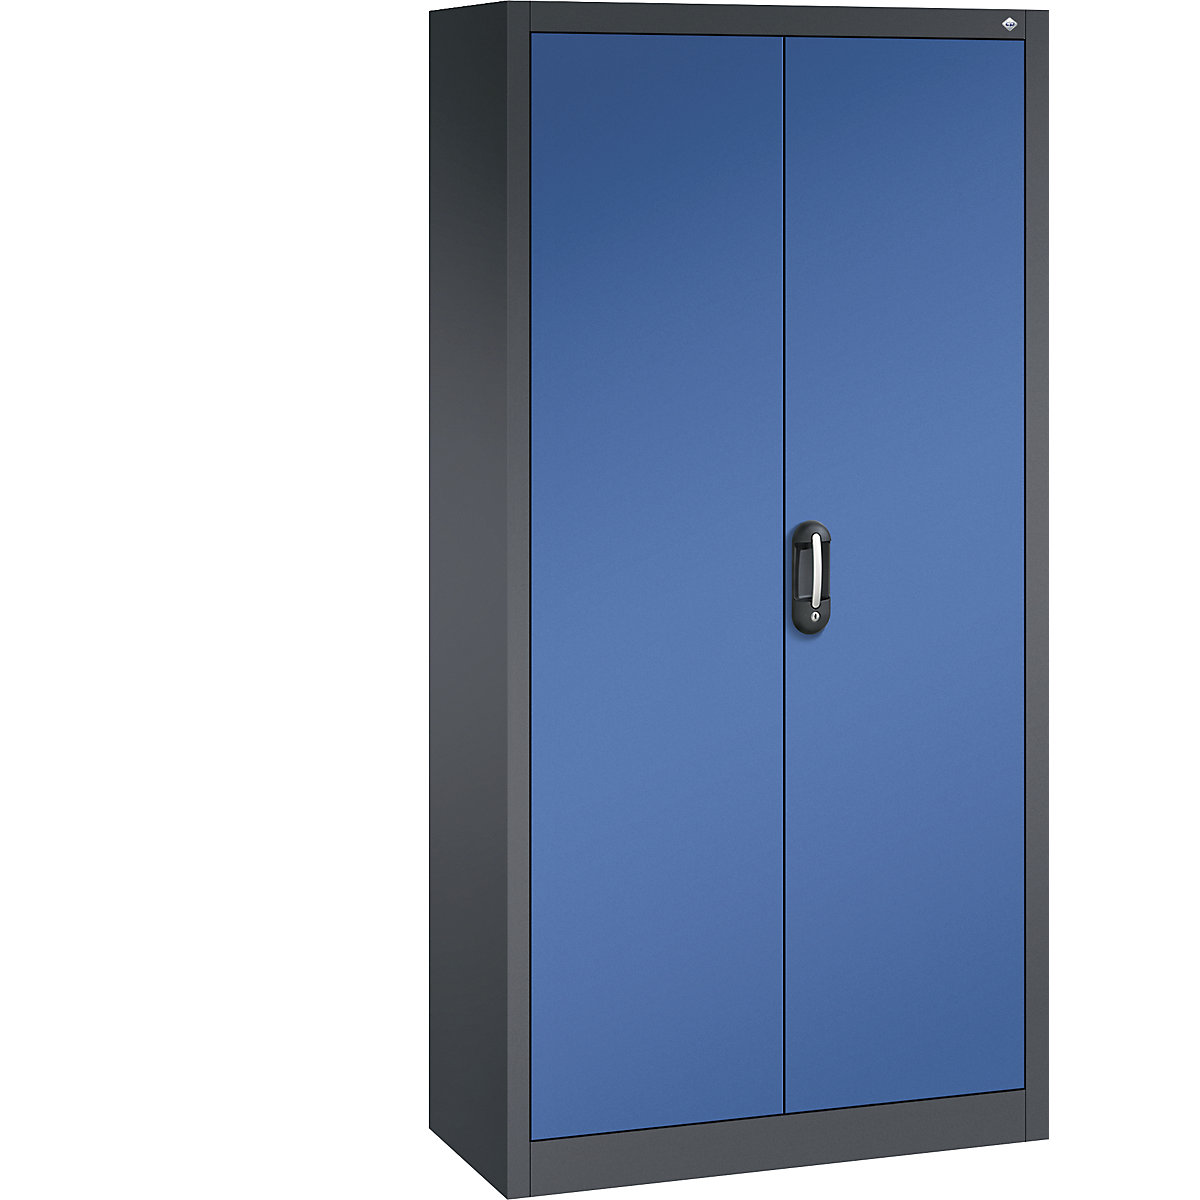 Univerzální skříň ACURADO – C+P, š x h 930 x 400 mm, černošedá / enciánová modrá-21